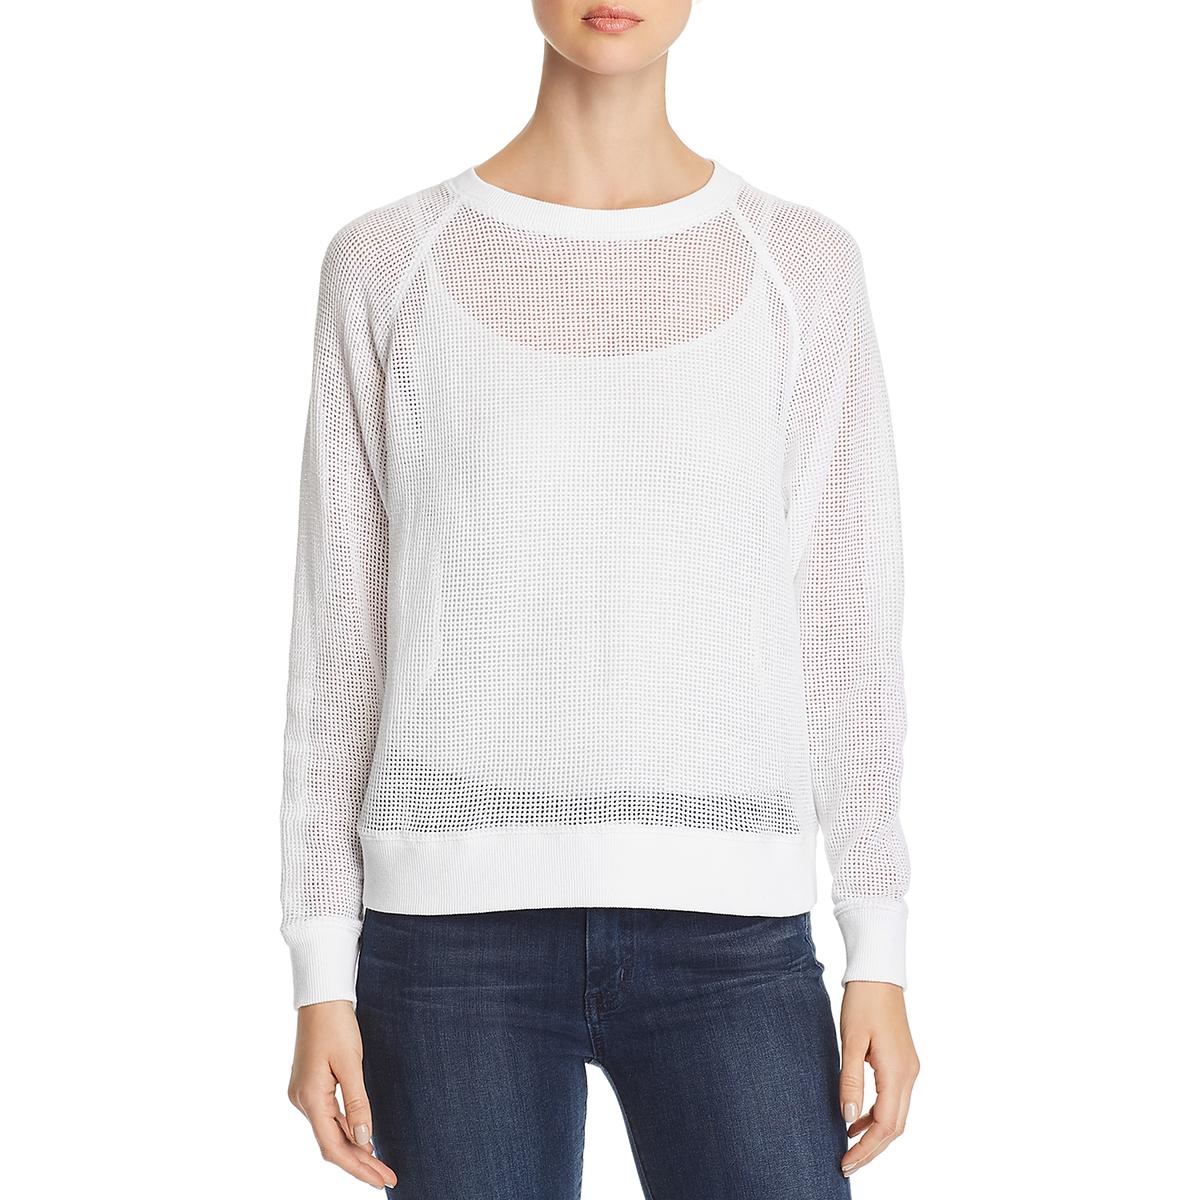 Eileen Fisher Womens White Cotton Crewneck Tee Top Shirt M BHFO 2828 | eBay